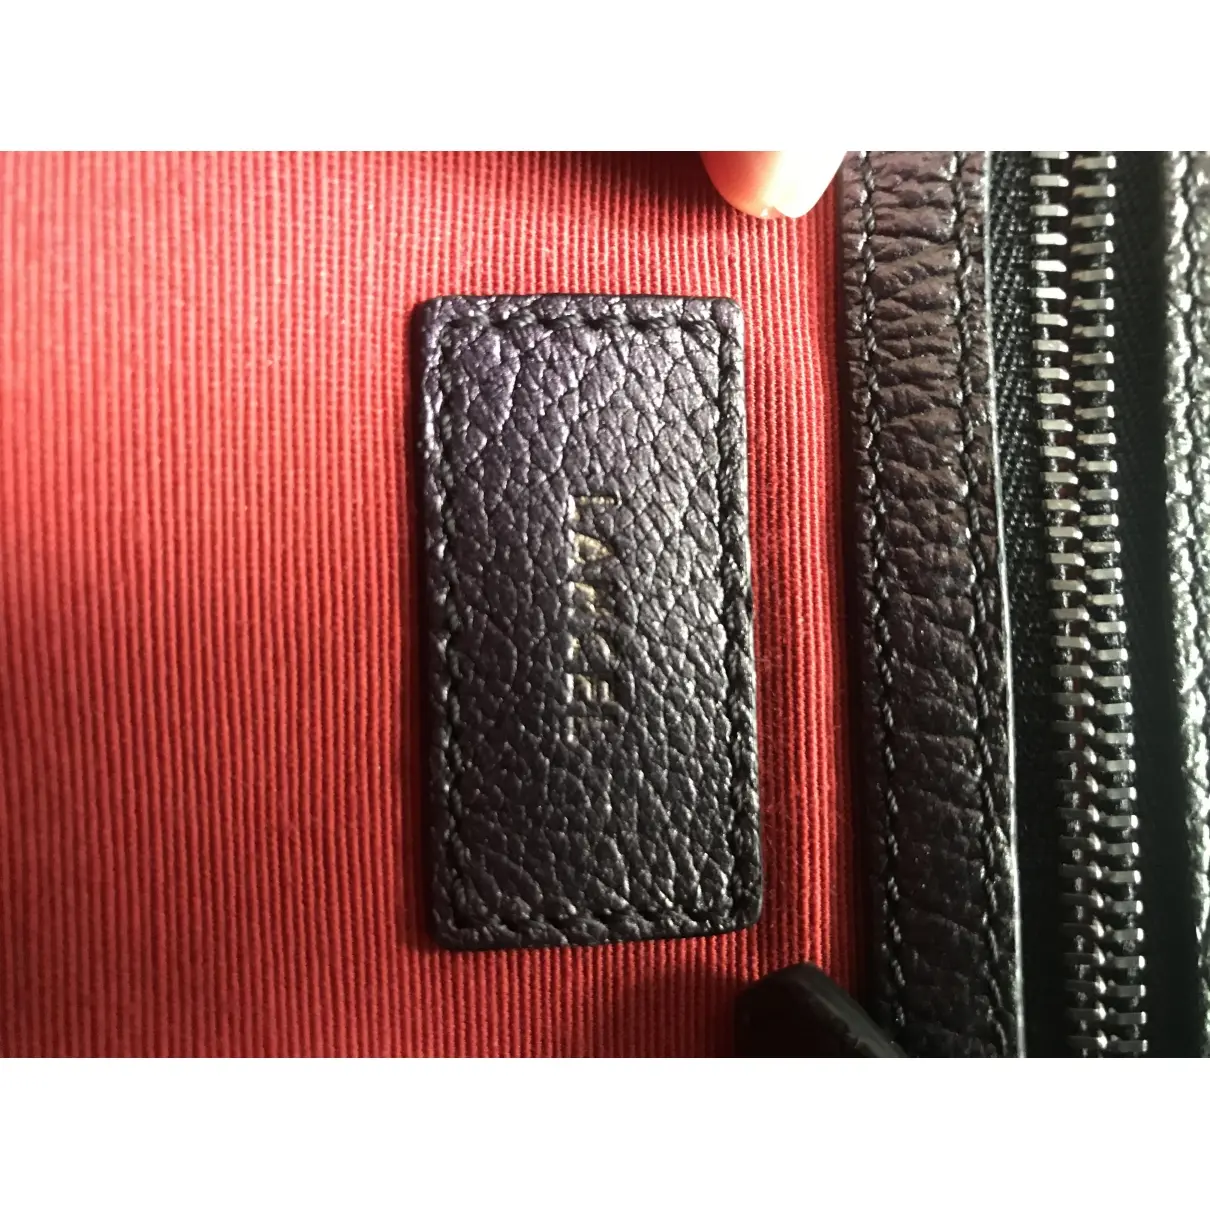 Lancel Huit leather handbag for sale